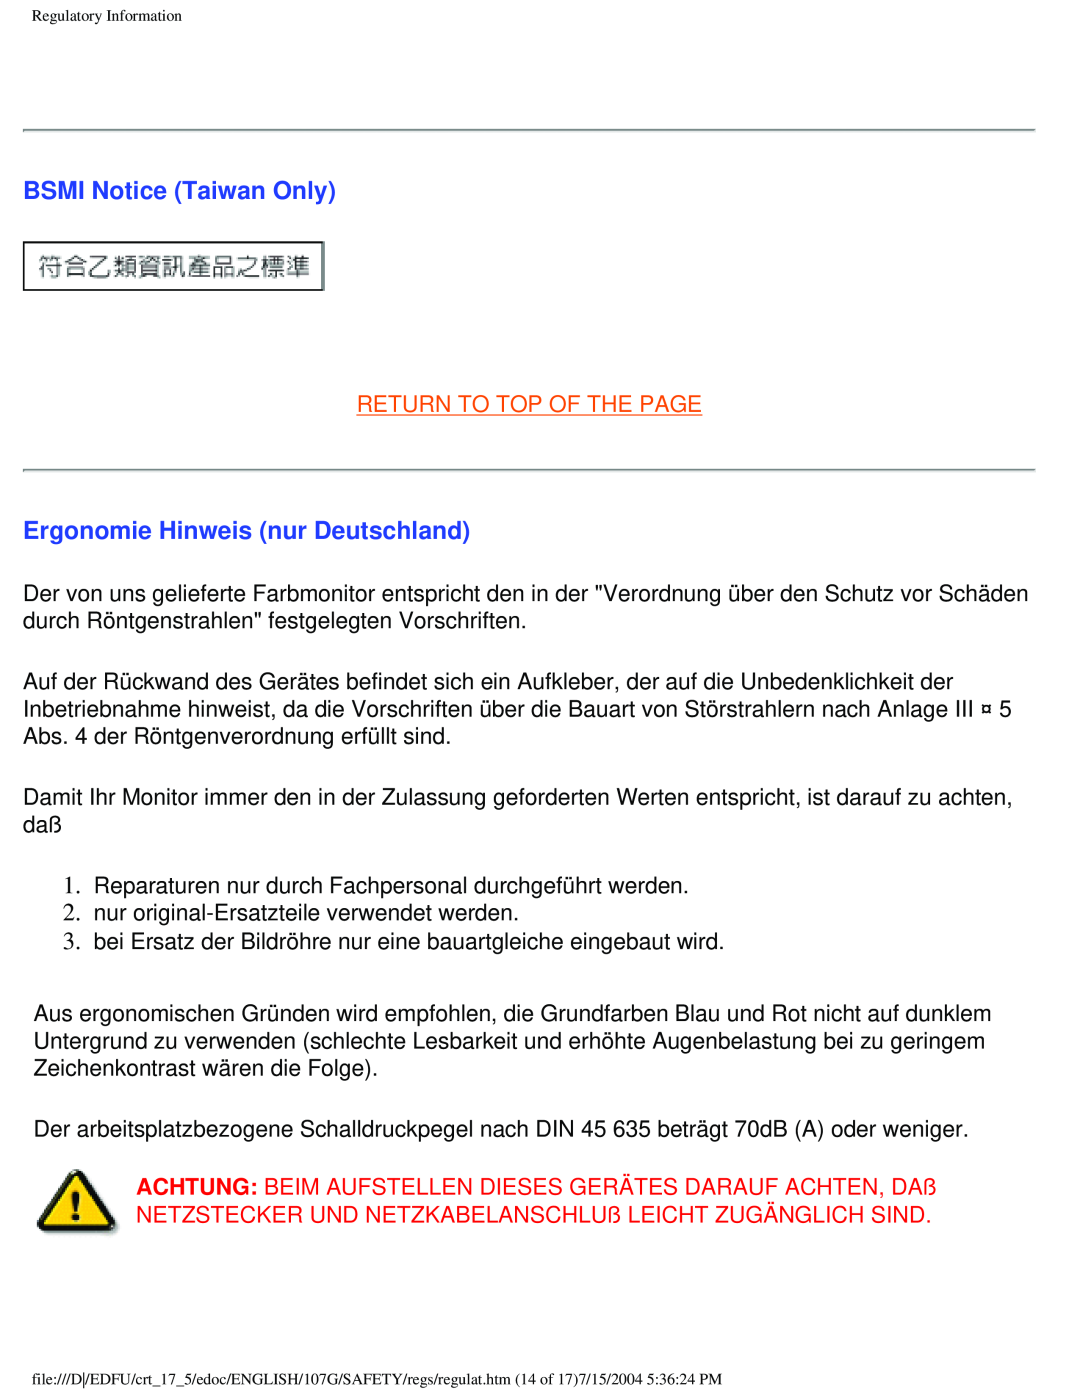 Philips 107G user manual BSMI Notice Taiwan Only, Ergonomie Hinweis nur Deutschland, Return To Top Of The Page 